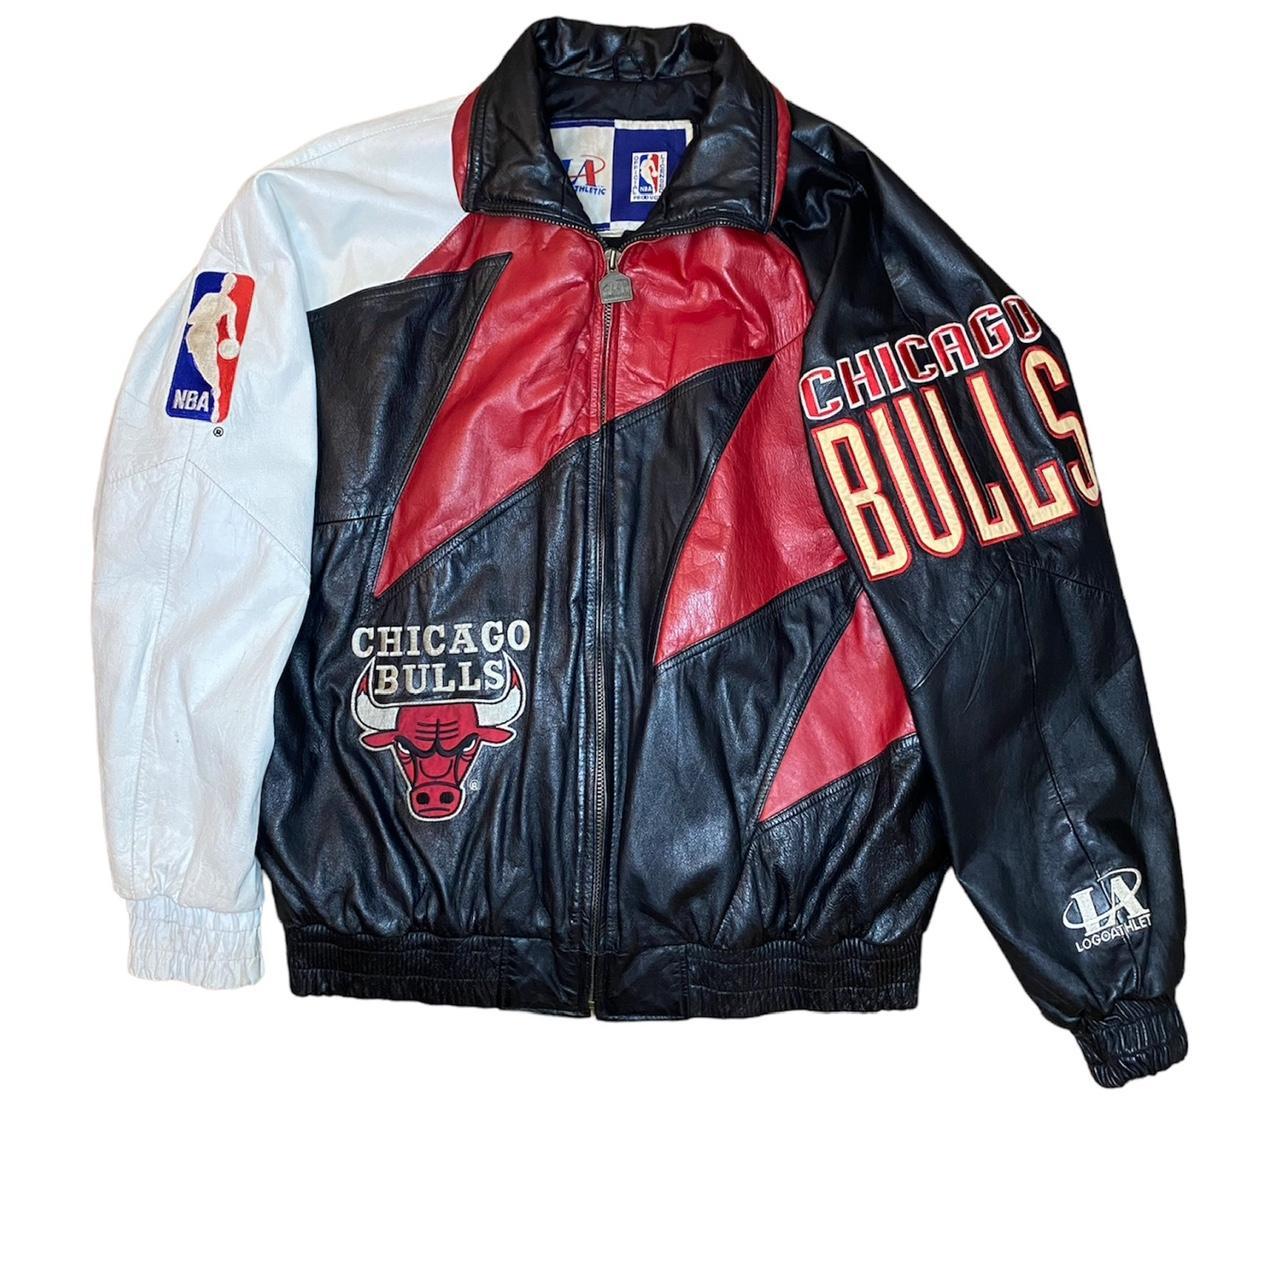 Chicago Bulls Vintage 1990s NBA Leather Jacket 